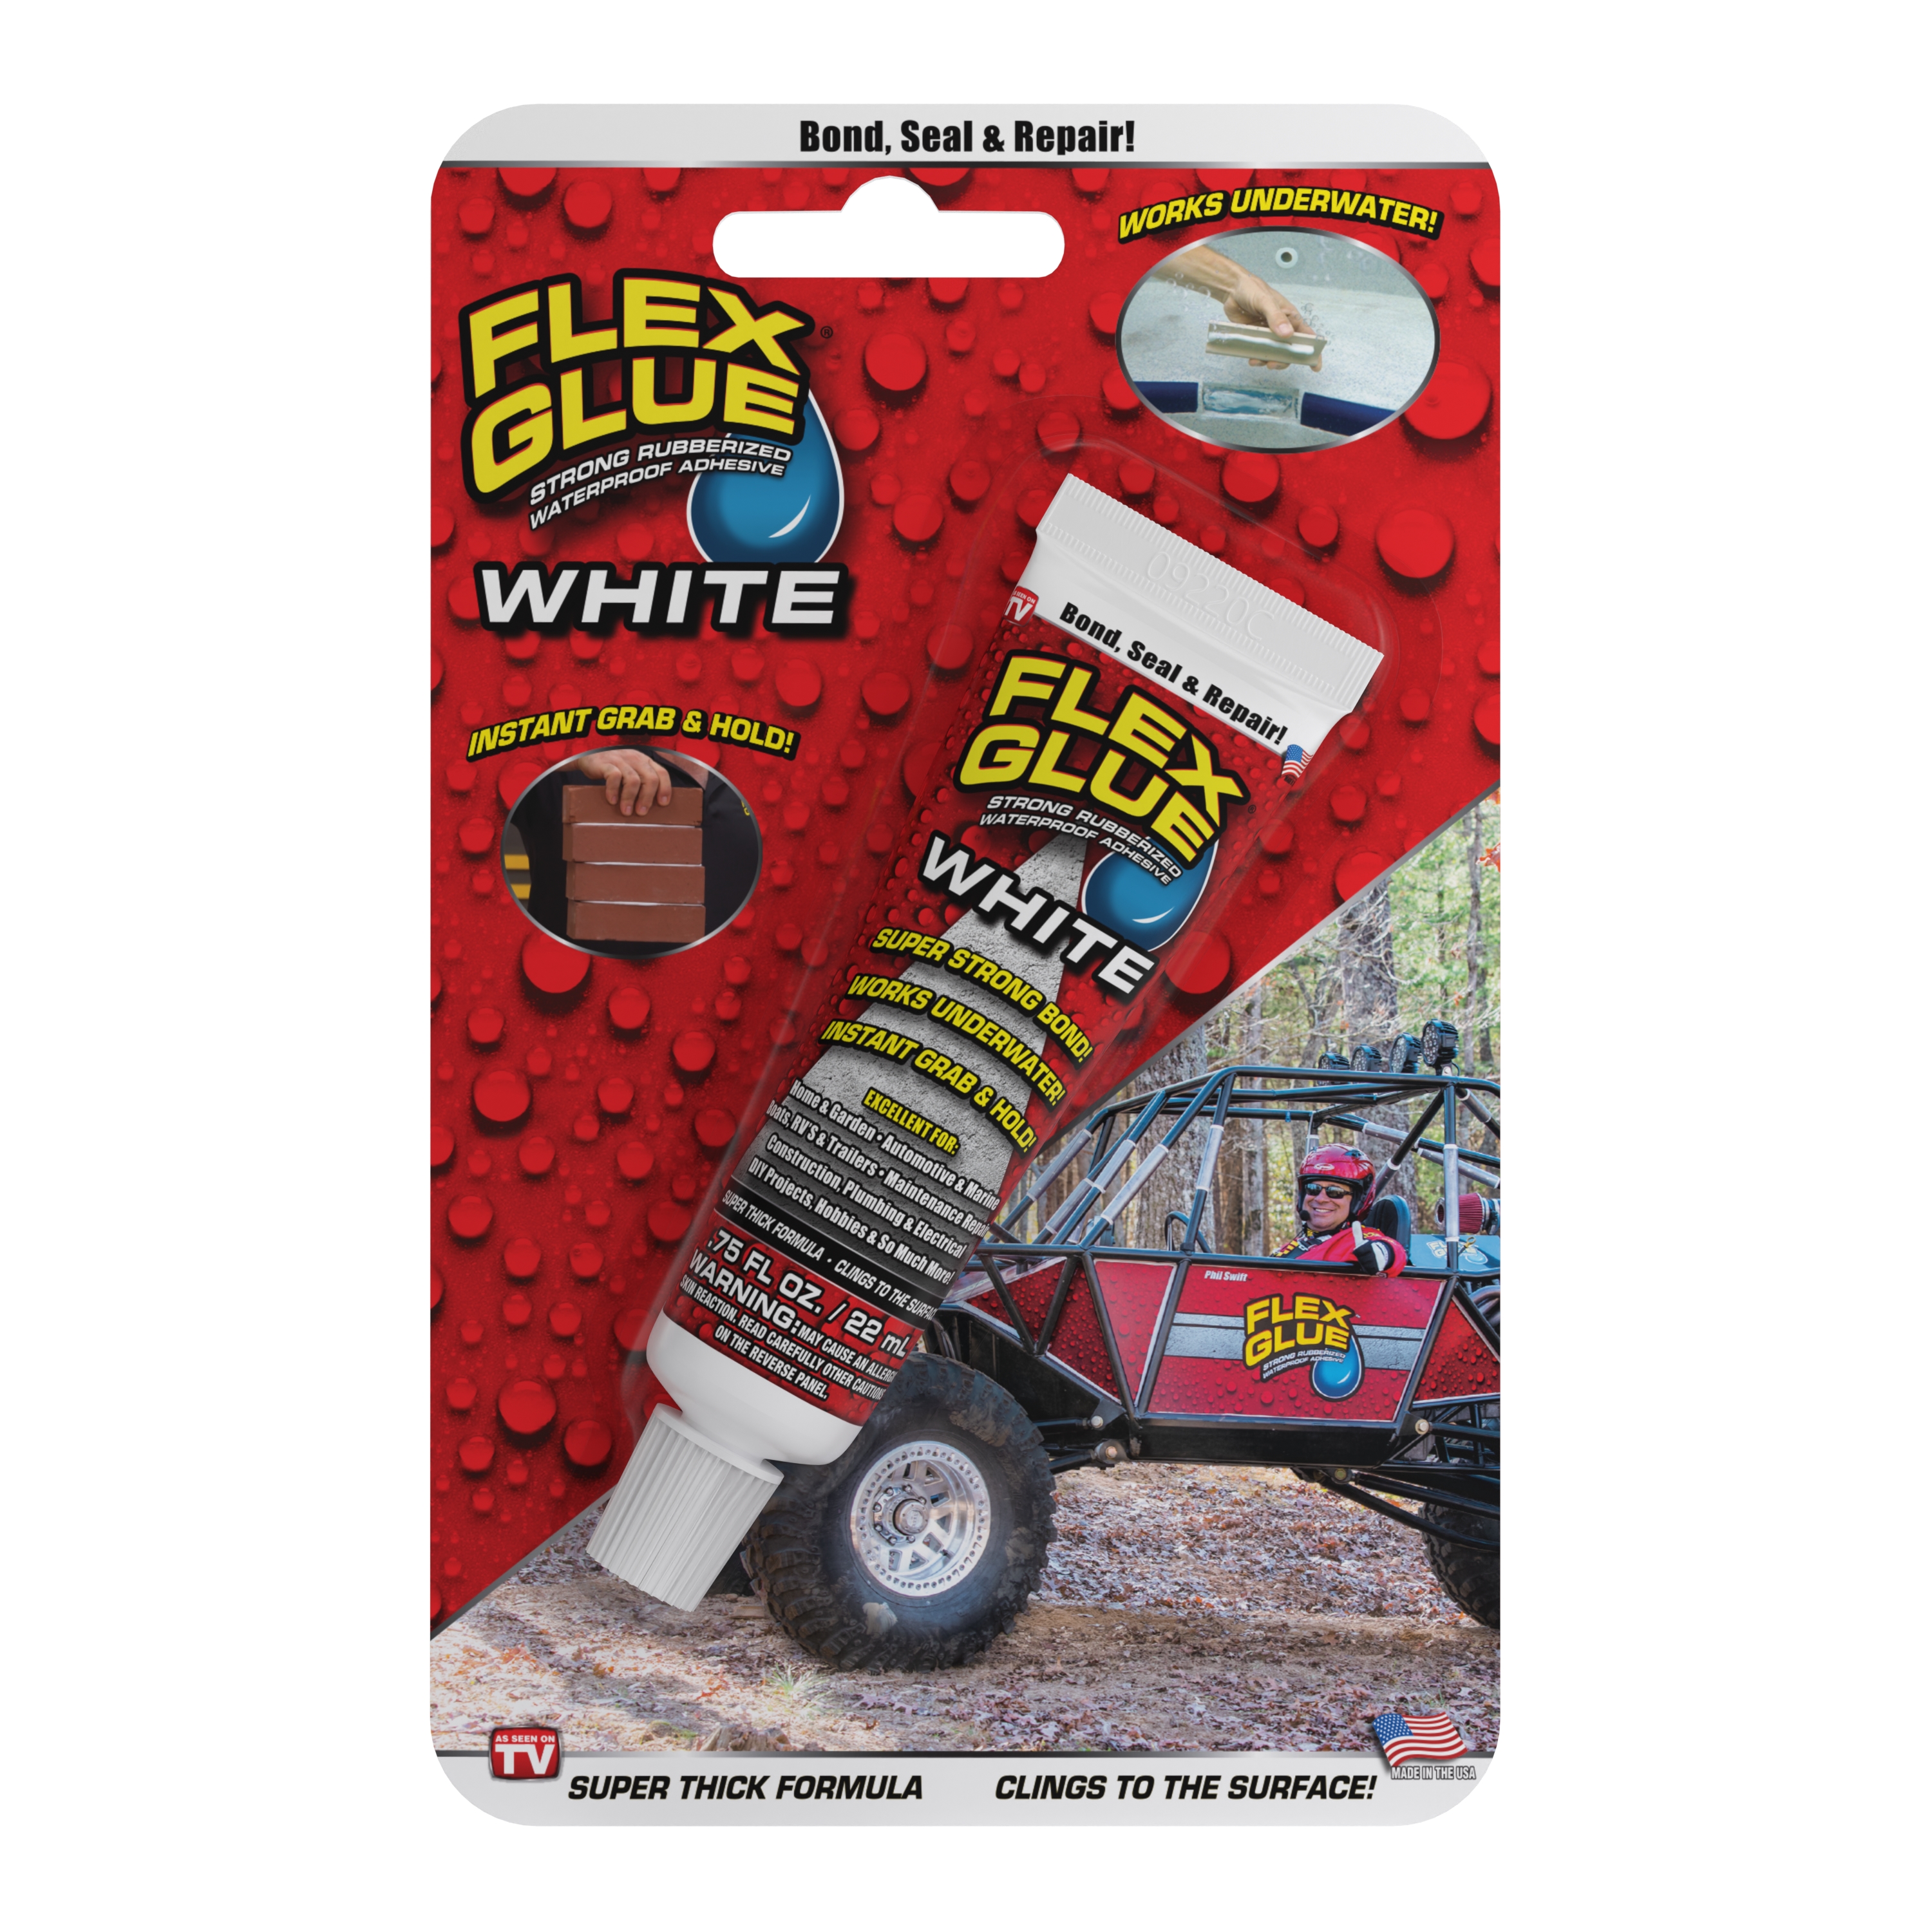 Flex Glue Mini Strong Rubberized Waterproof Adhesive, 0.75 oz, White - image 1 of 8